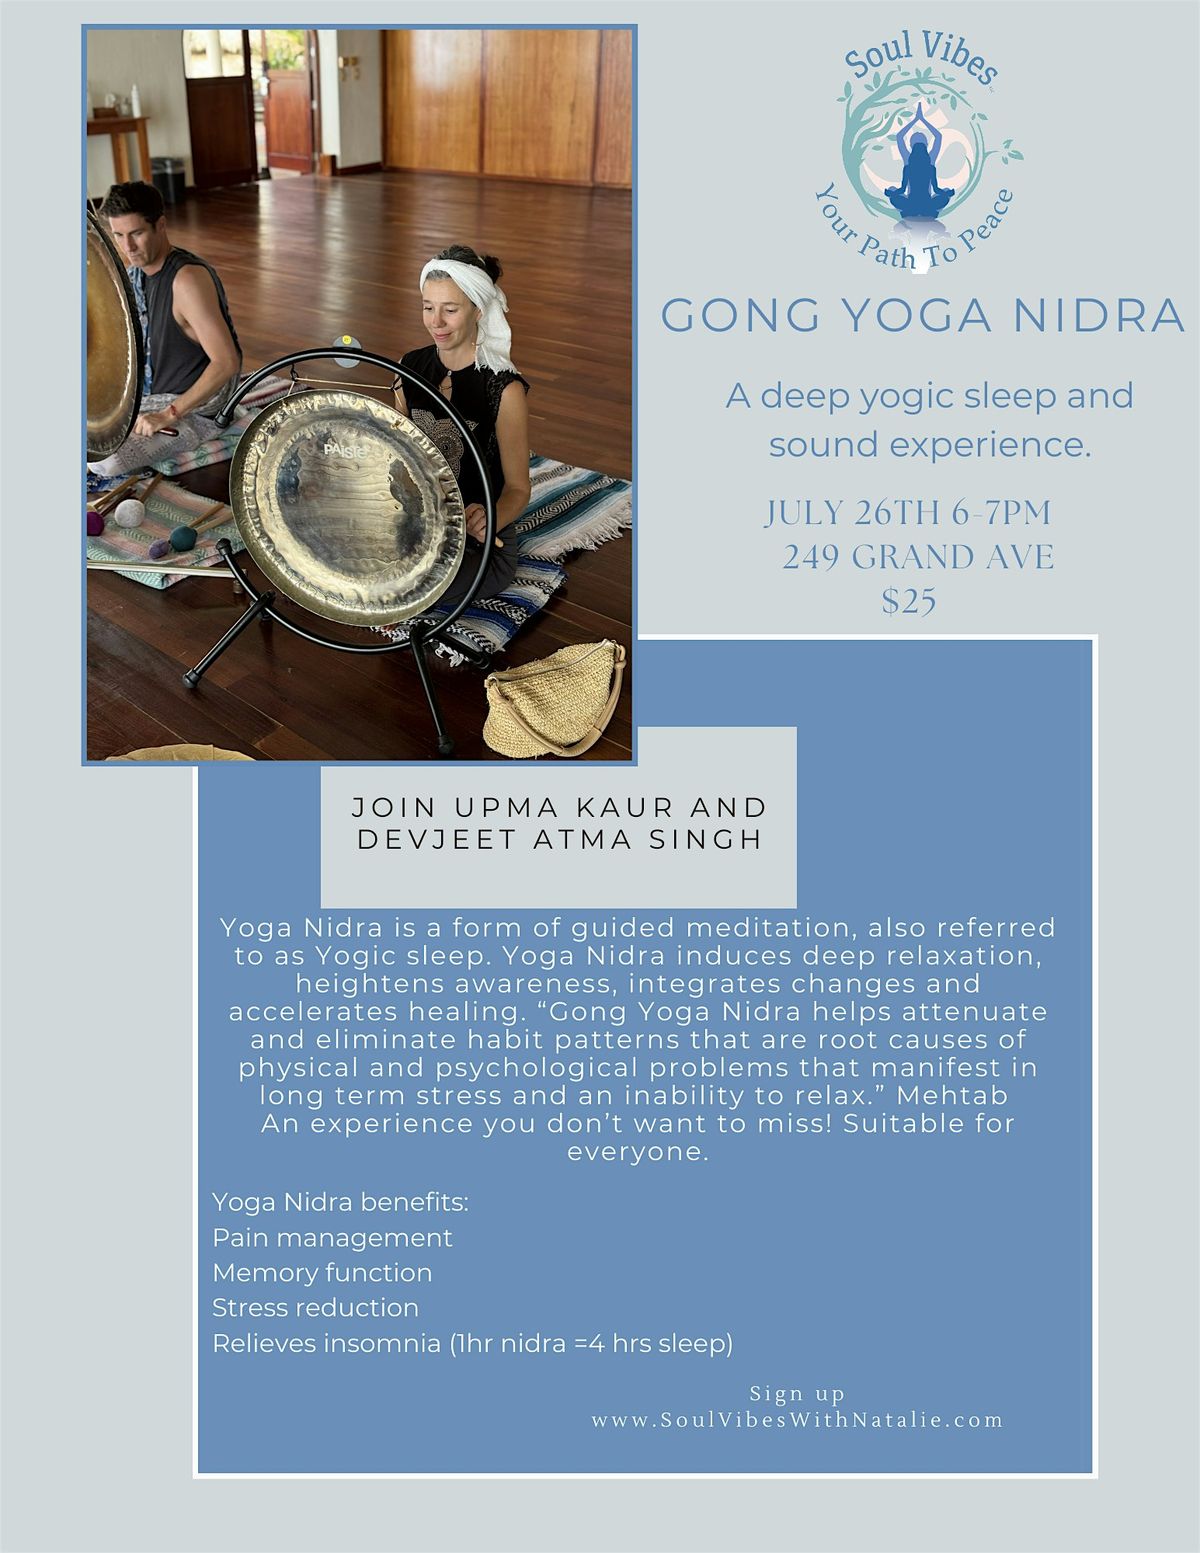 Gong Yoga Nidra